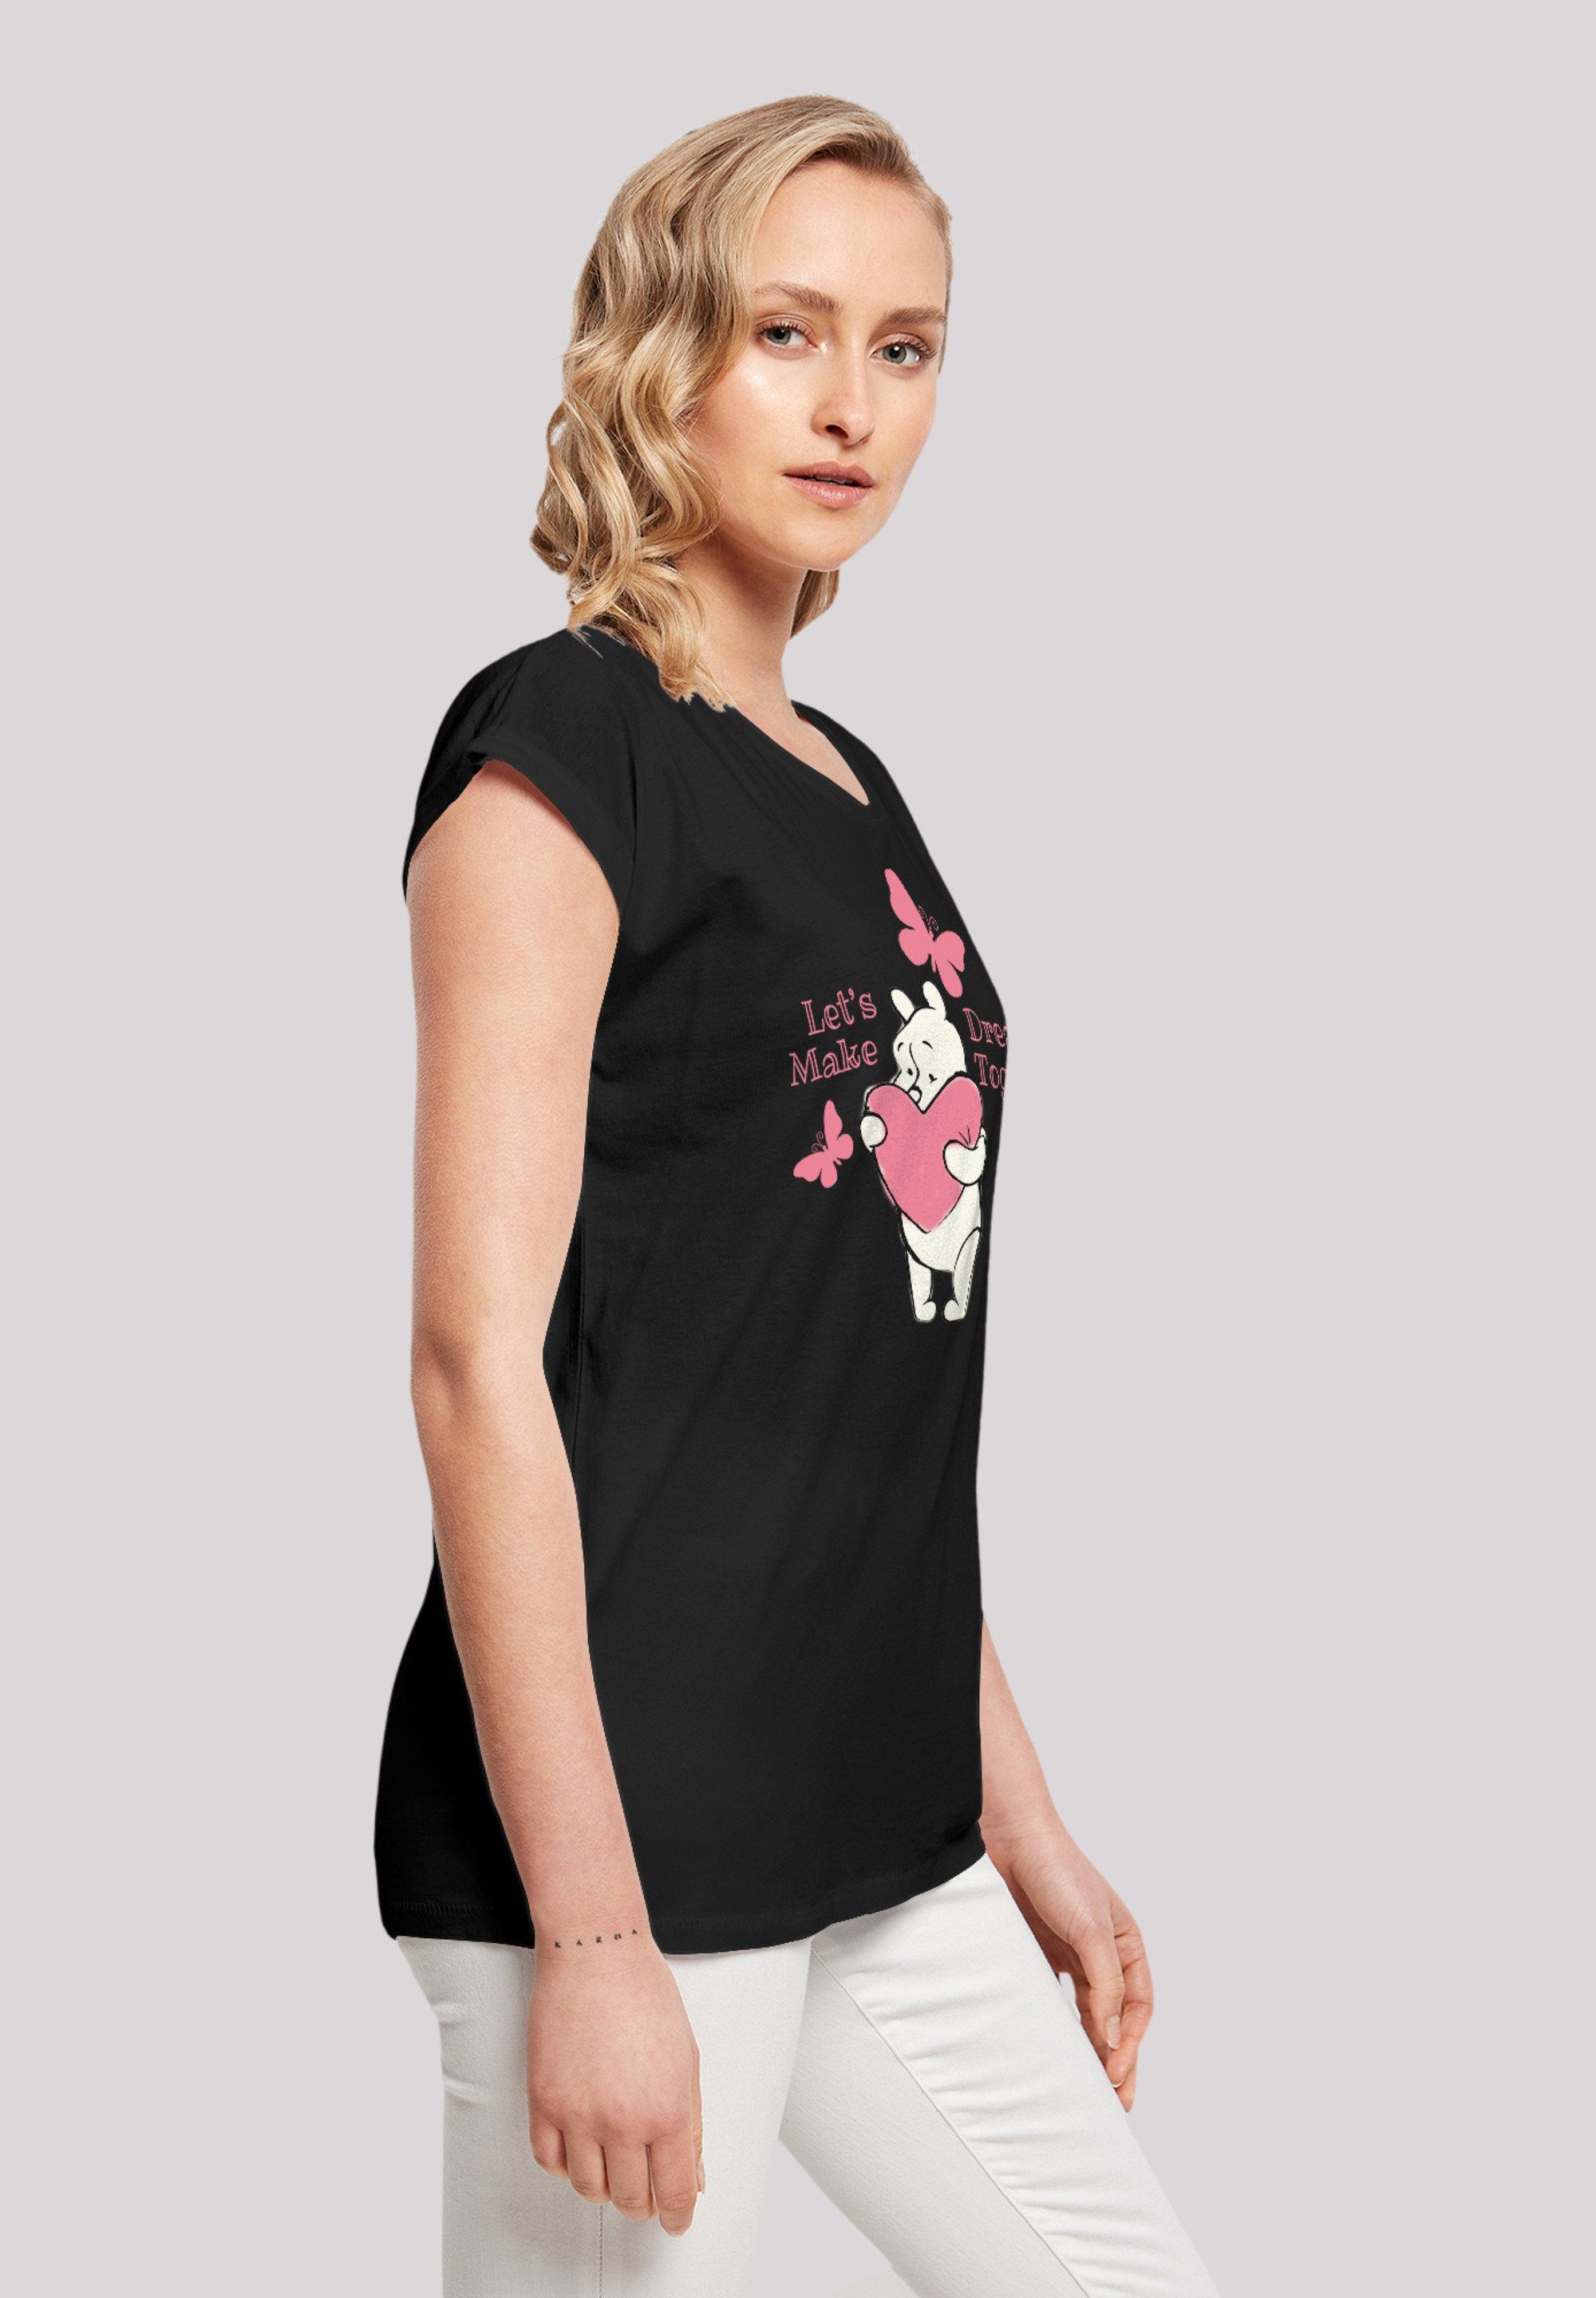 Winnie Dreams Together Qualität Premium Disney T-Shirt Make Puuh F4NT4STIC Let's